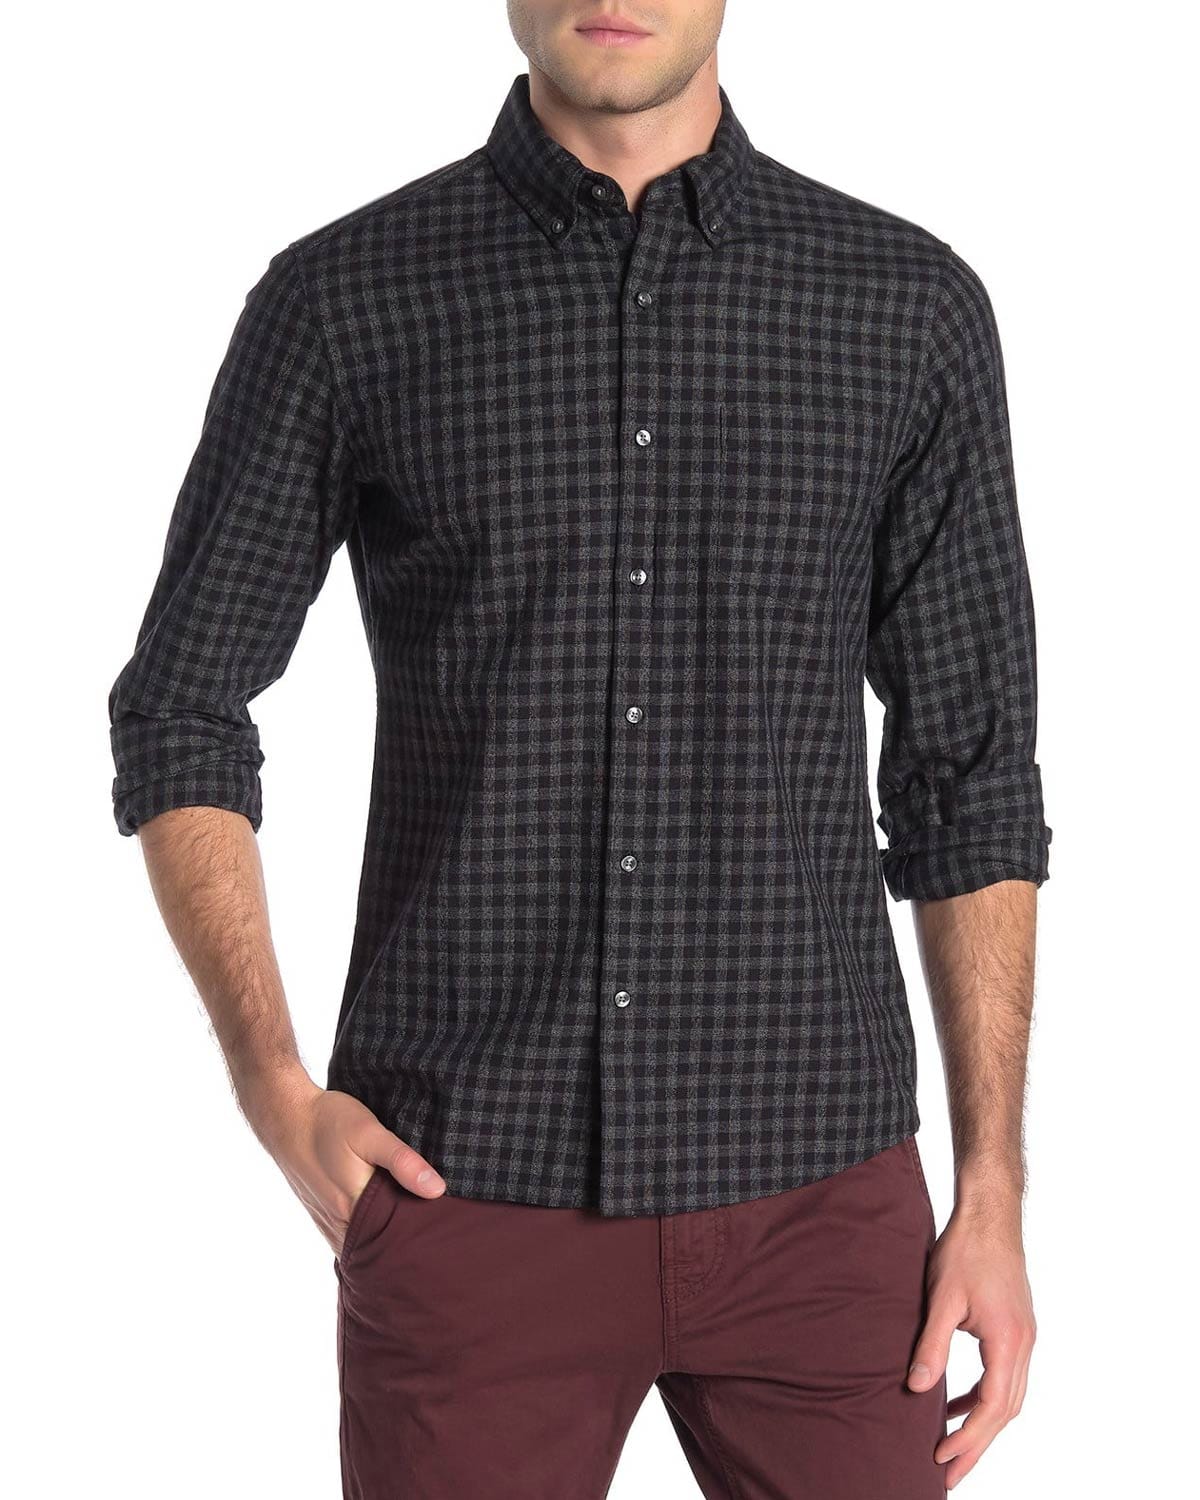 Michael Kors Casual Shirts Mens Shirts ButtonFront SlimFit PalmPrint XL   eBay